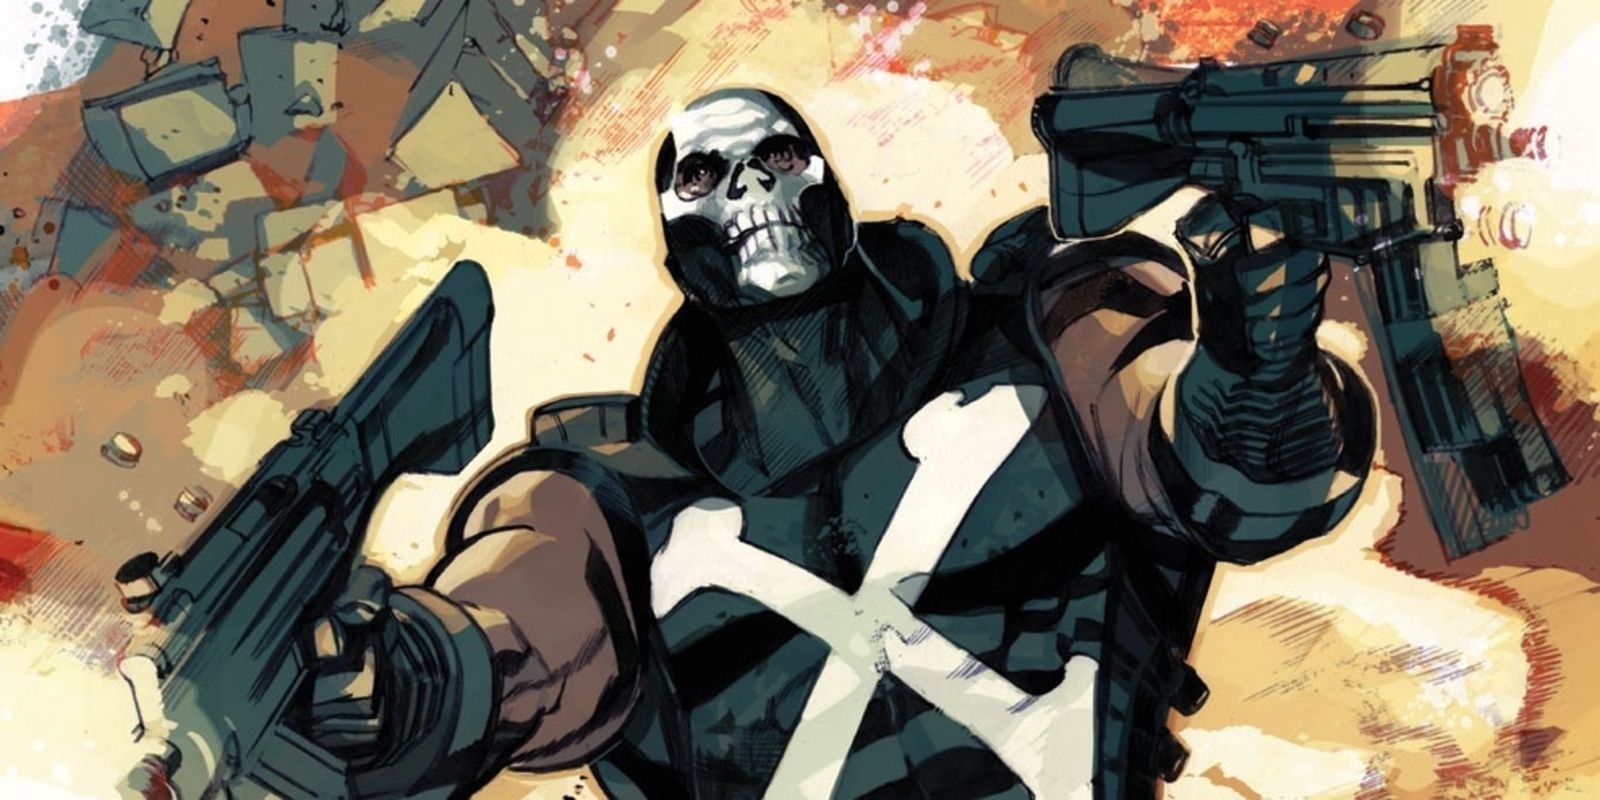 Captain America foe Crossbones shoots a gun in each hand in Marvel Comics